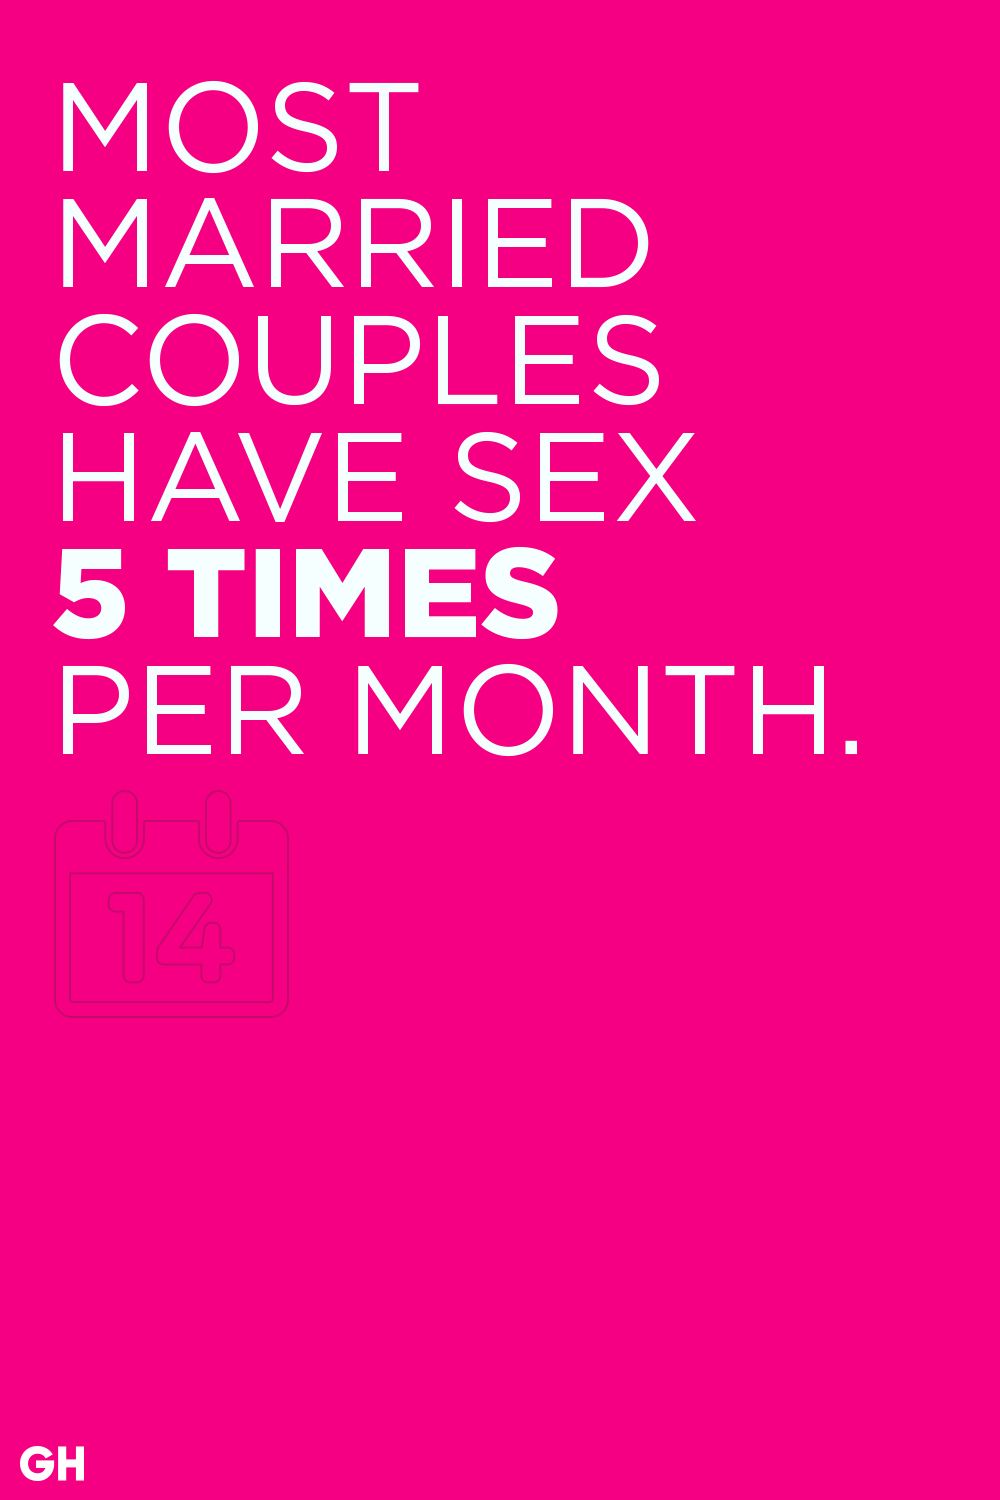 statistics on married sex